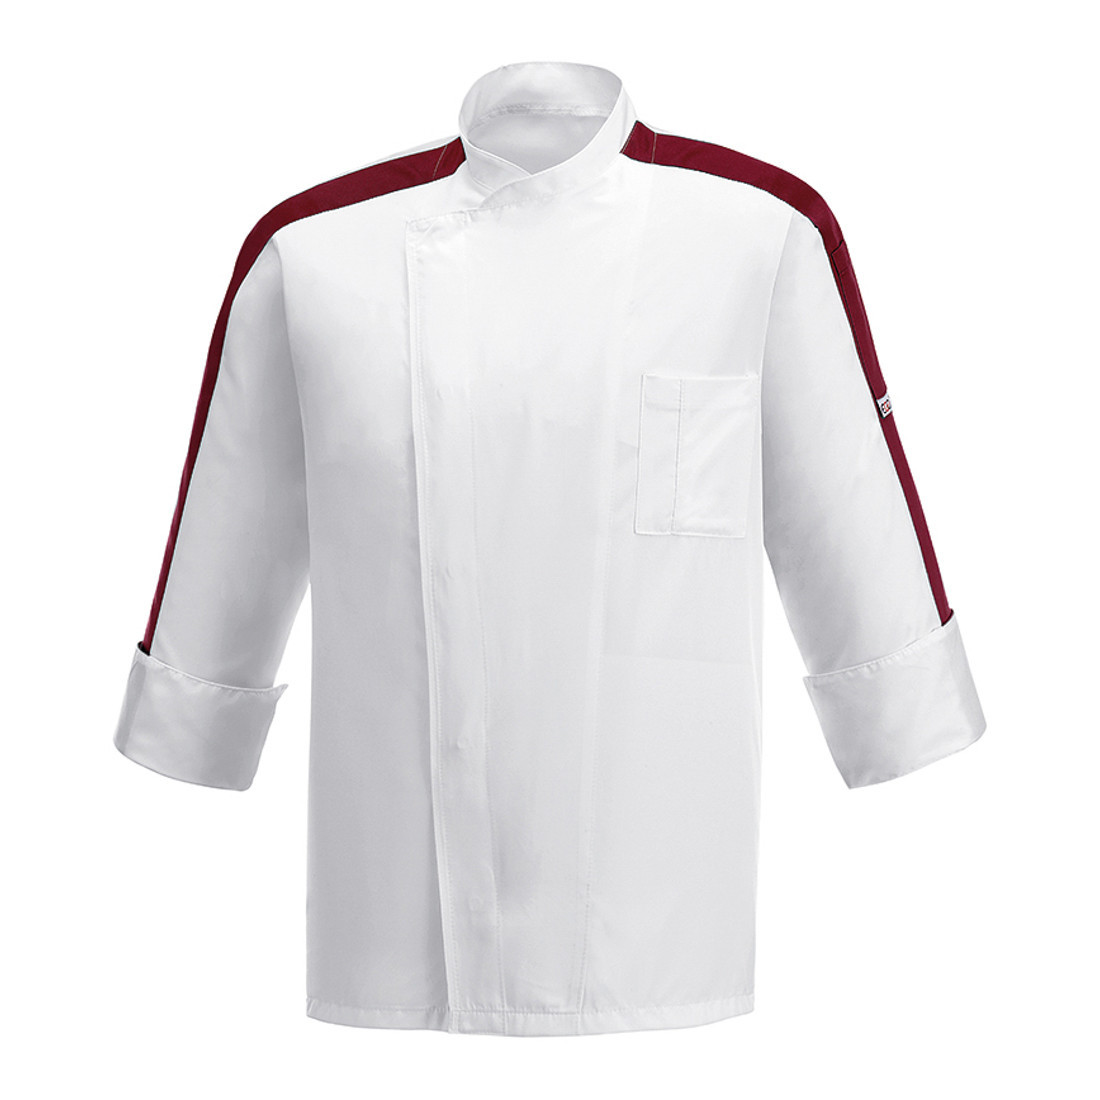 Ribbon Chef's Jacket - Safetywear